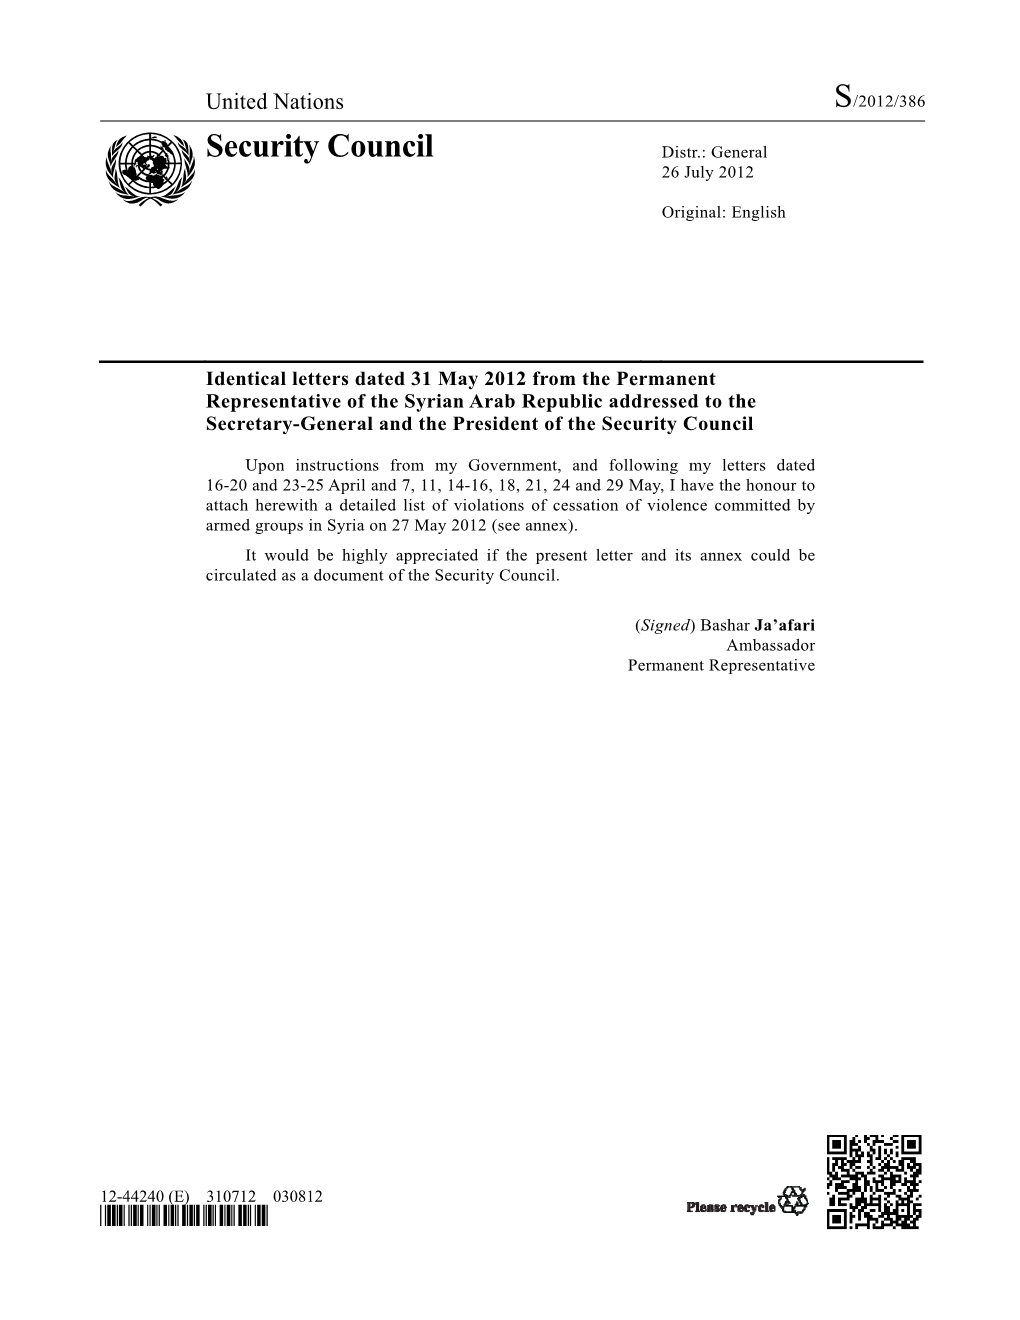 Security Council Distr.: General 26 July 2012